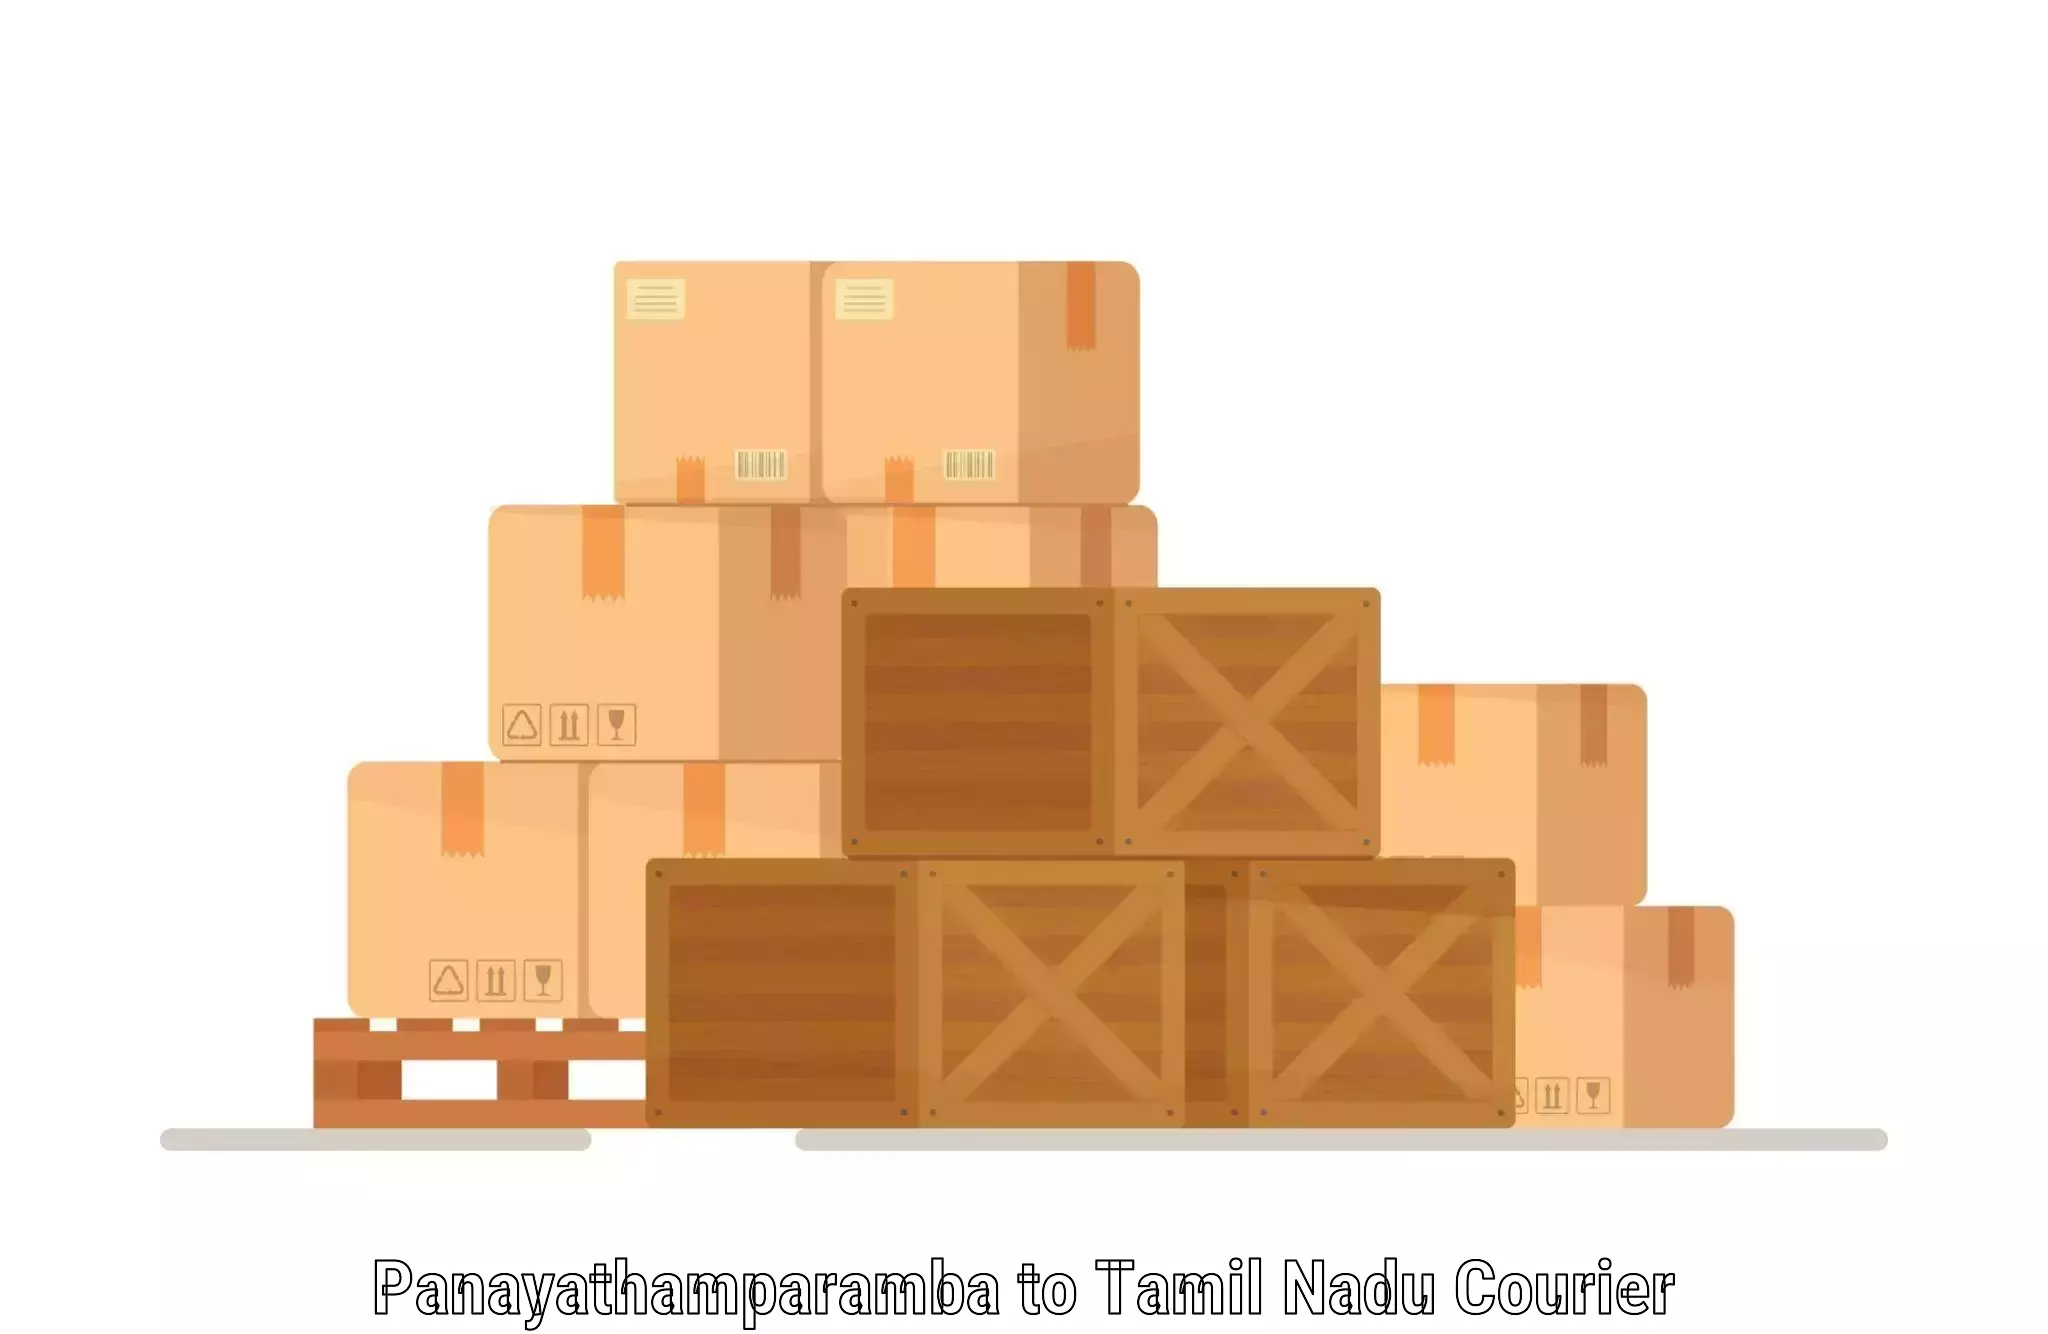 Doorstep delivery service Panayathamparamba to Tamil Nadu